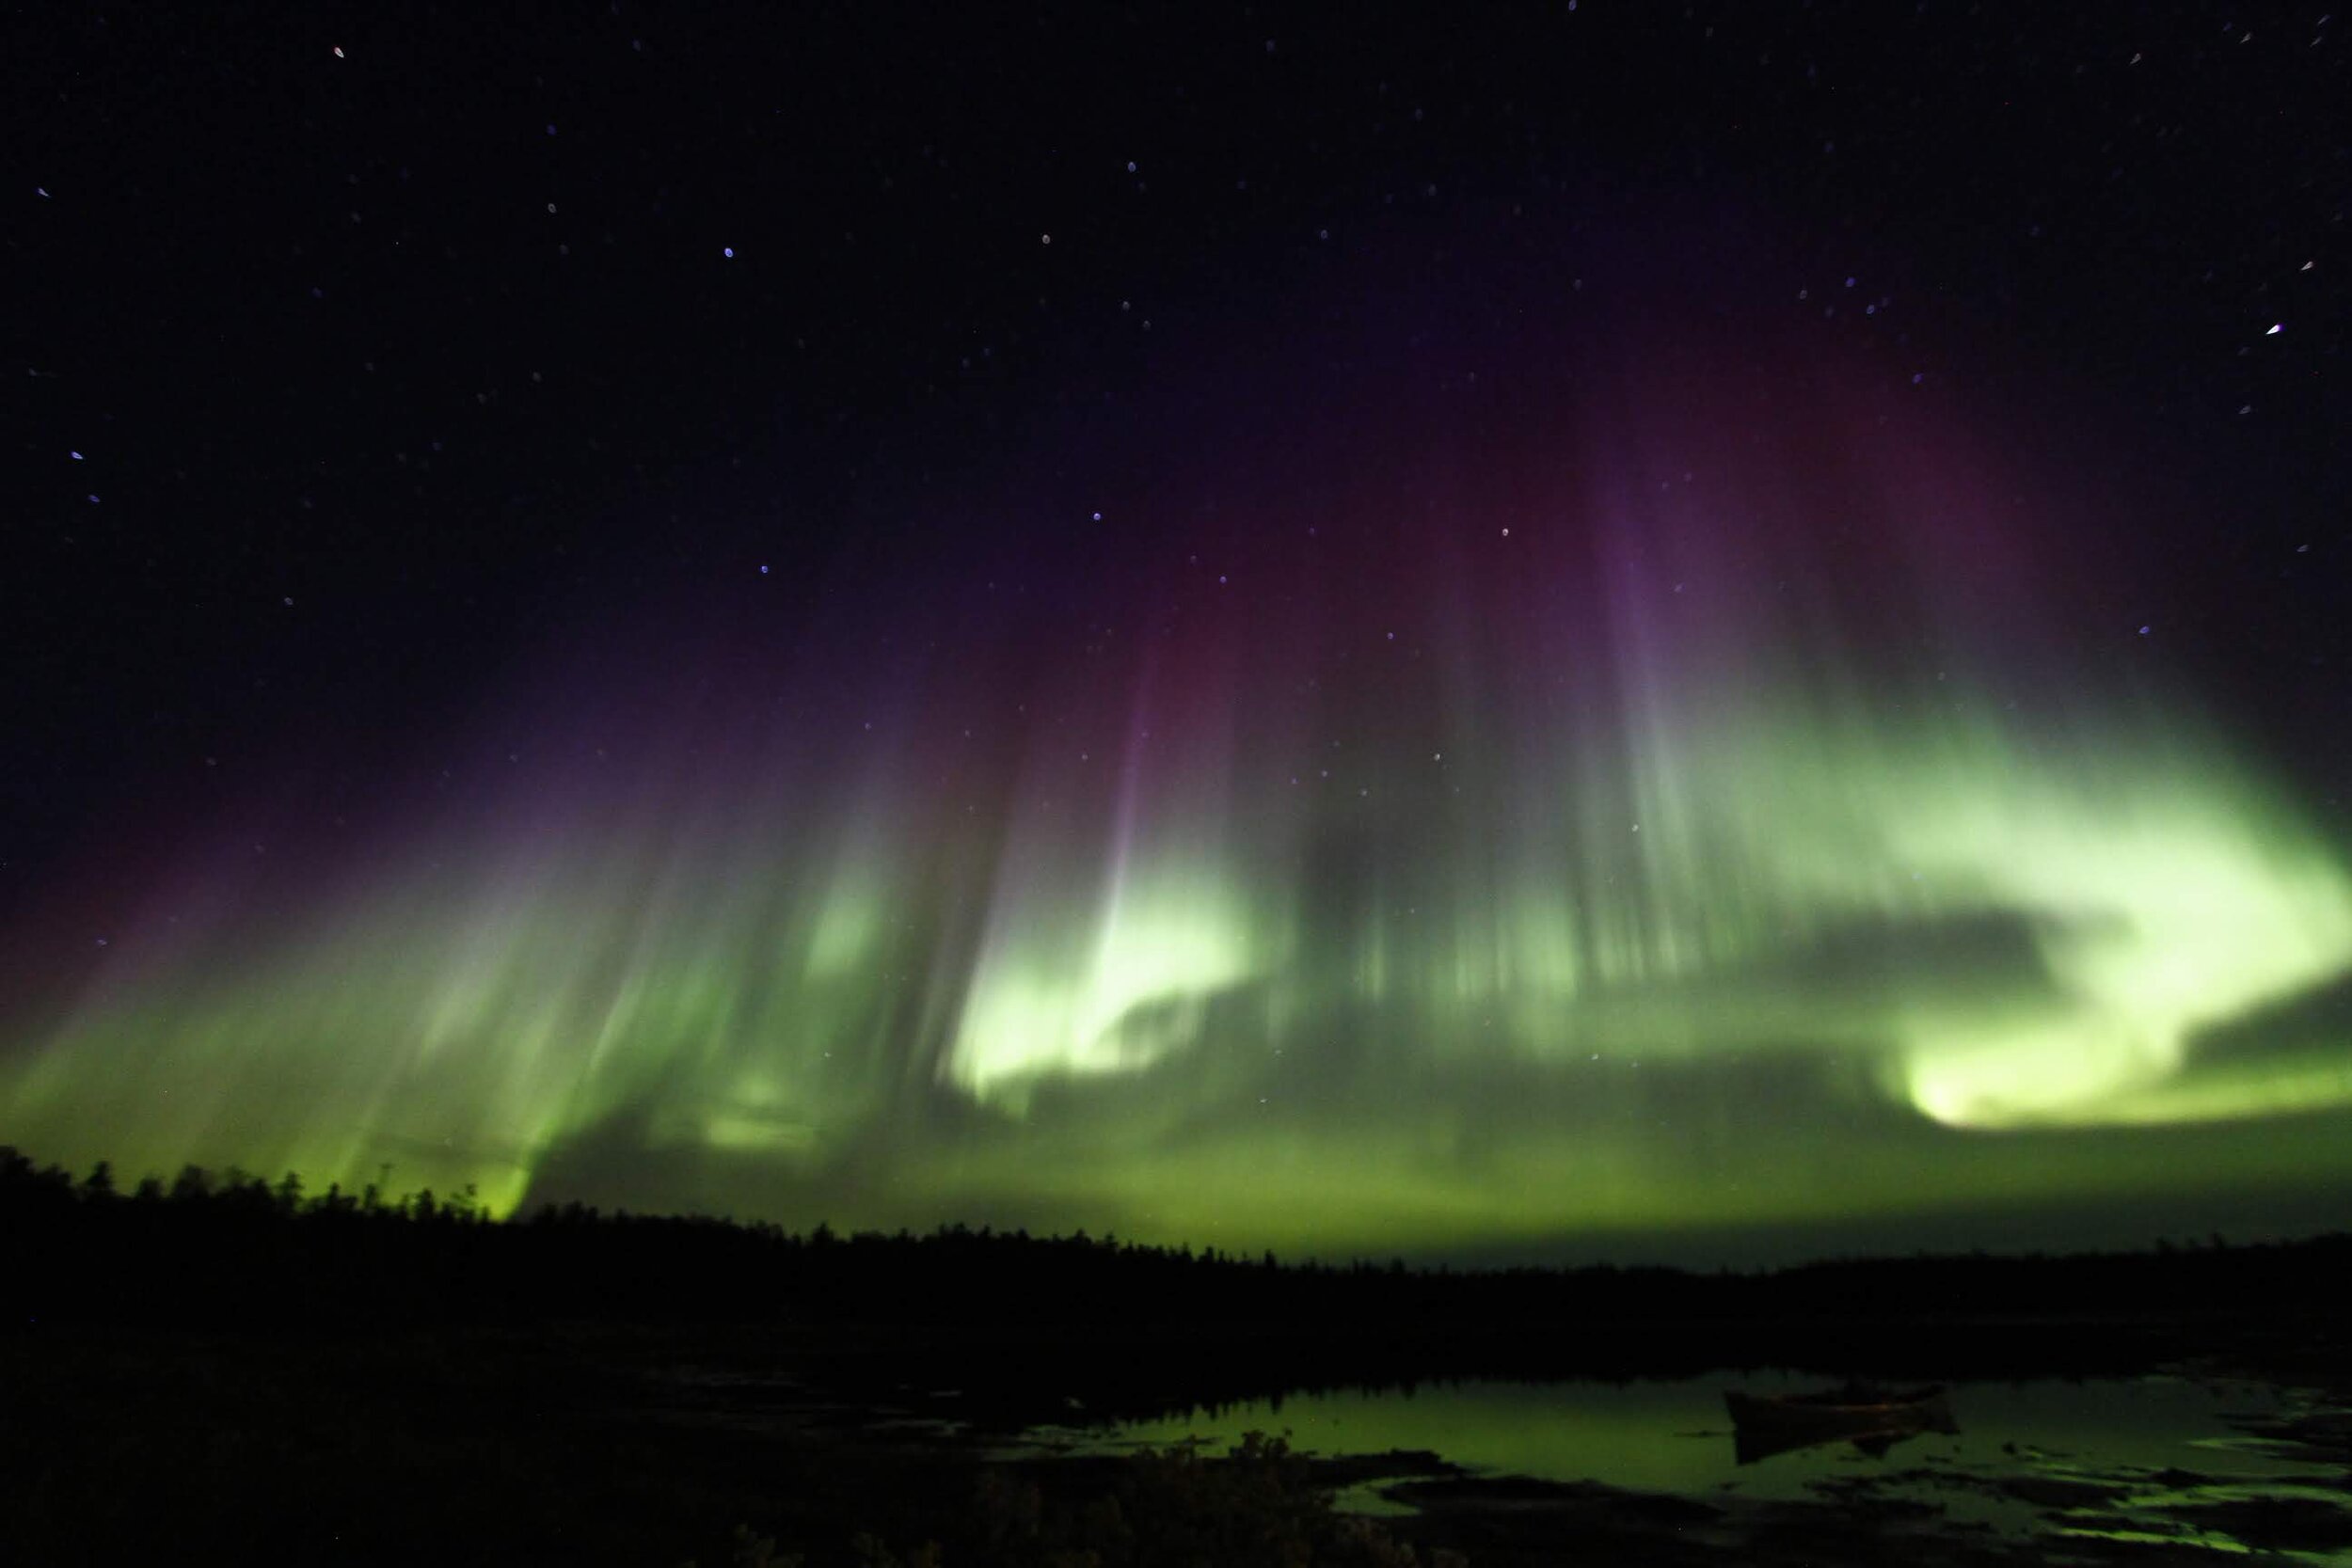 Aurora-Village-Yellowknife-Northwest-Territories-Canada-Aurora-Borealis-Northern-Lights-summer-Nature-Nopeople-Landscape-Colourful-Green-Purple-perfect-He - Copy.JPG